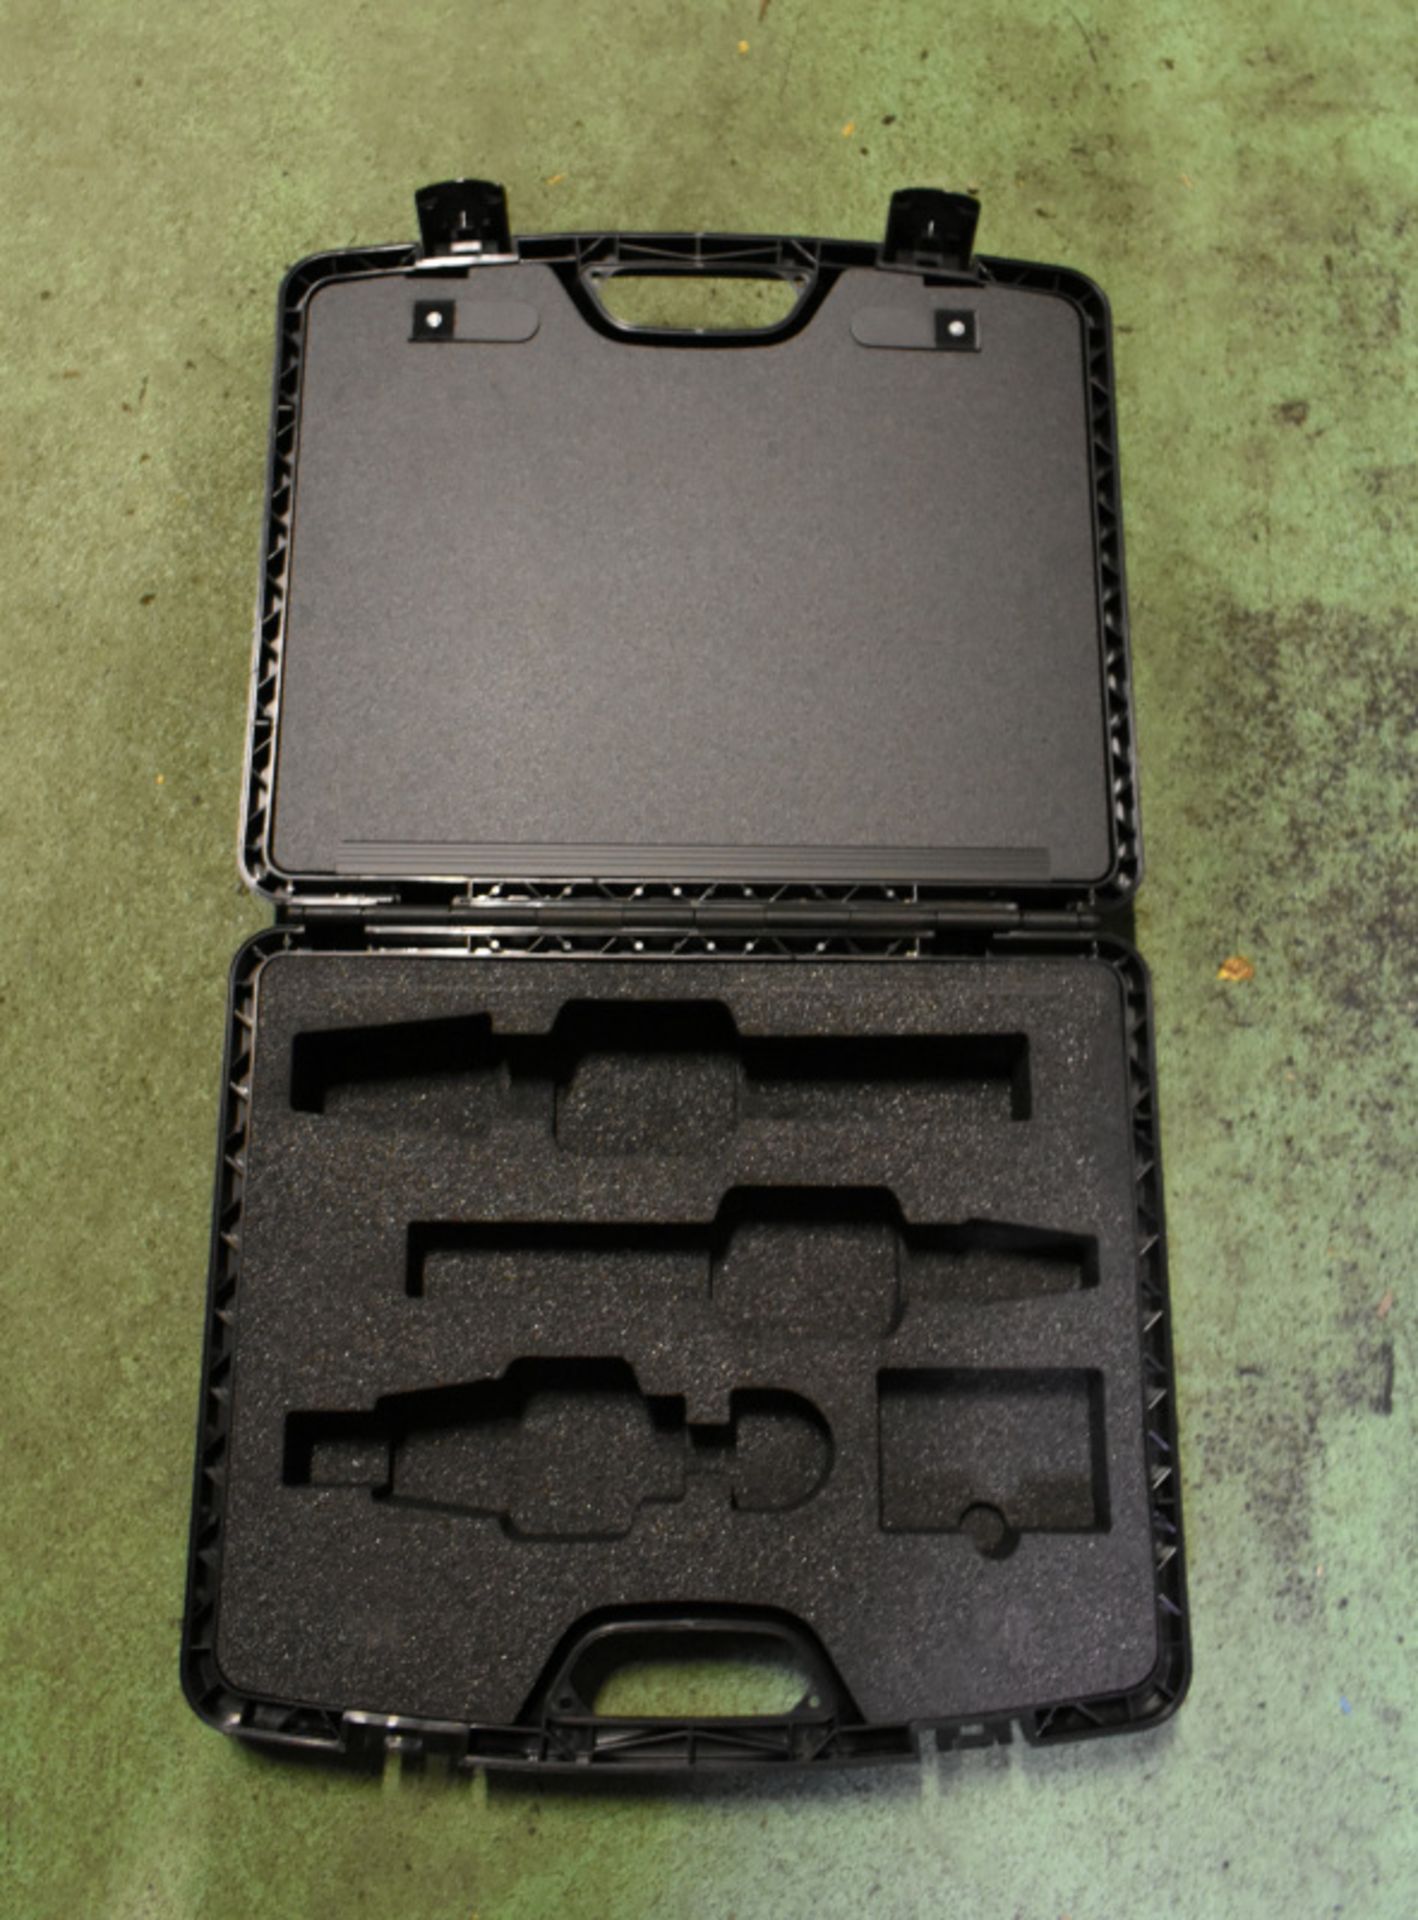 2x Plastic Cases - L 500mm x W 450mm x H 200mm - Image 2 of 4